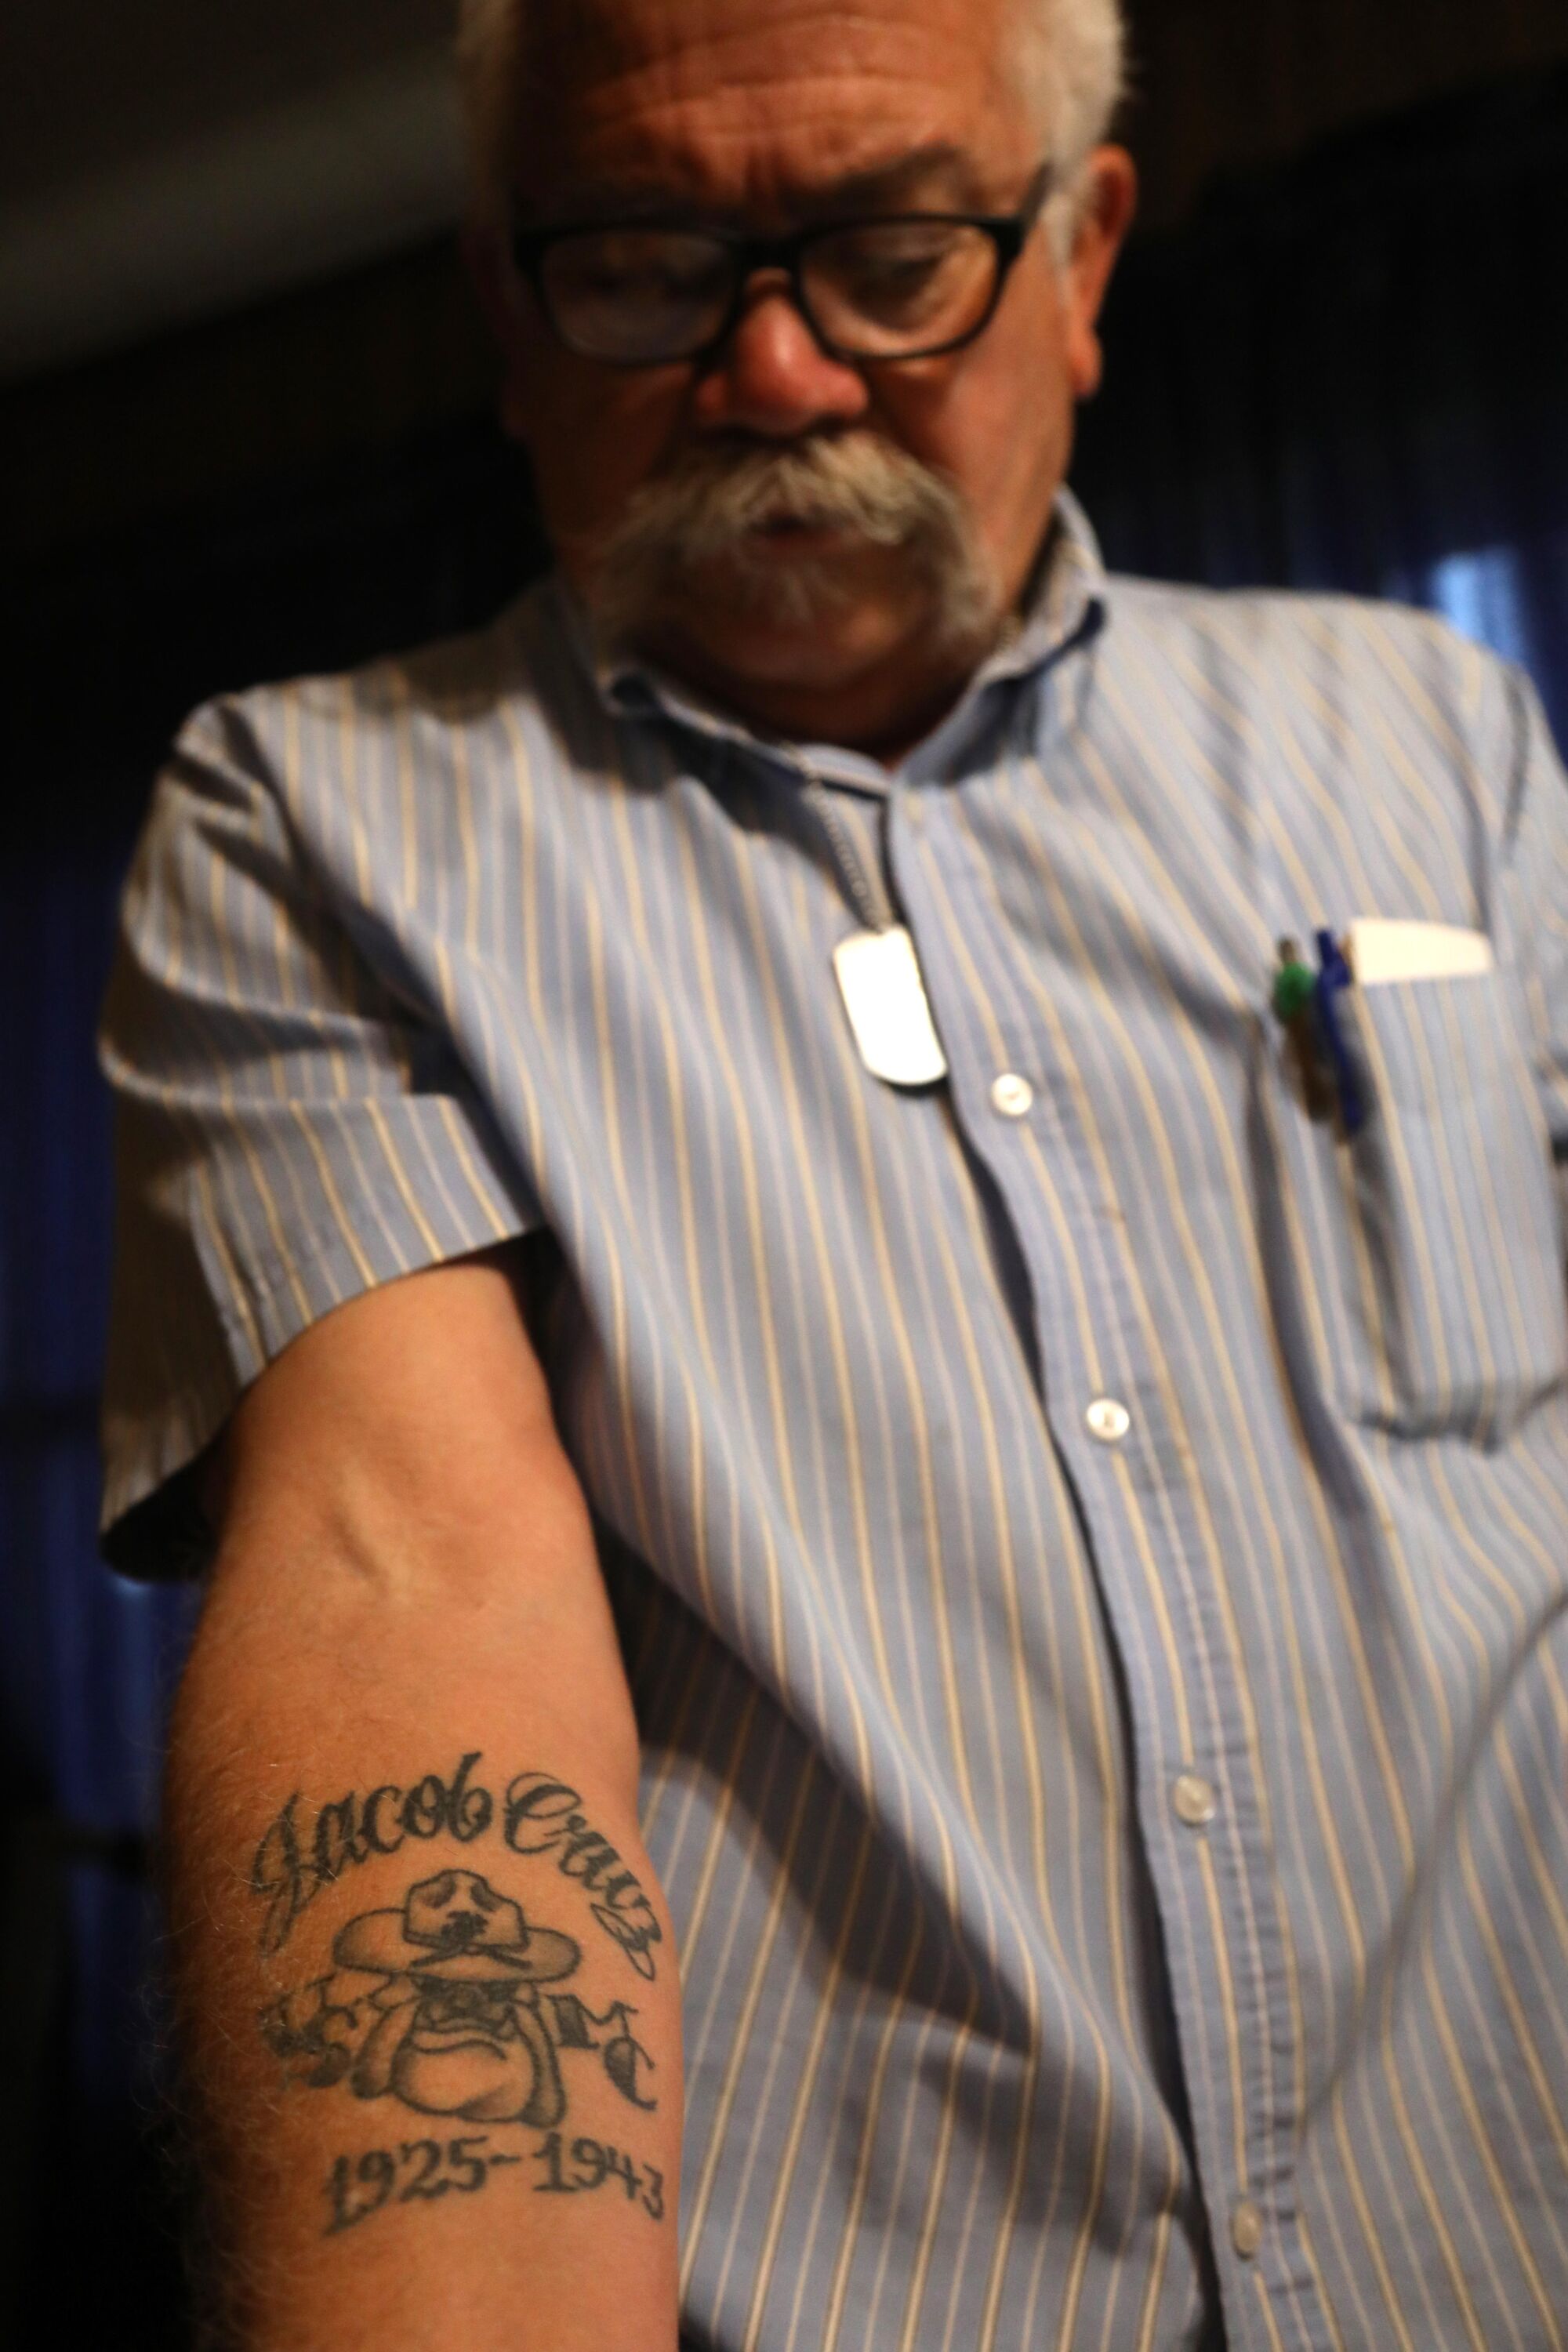 Isaac Cruz III shows his tattoo on his arm that reads "Jacob Cruz" and "1925-1943"